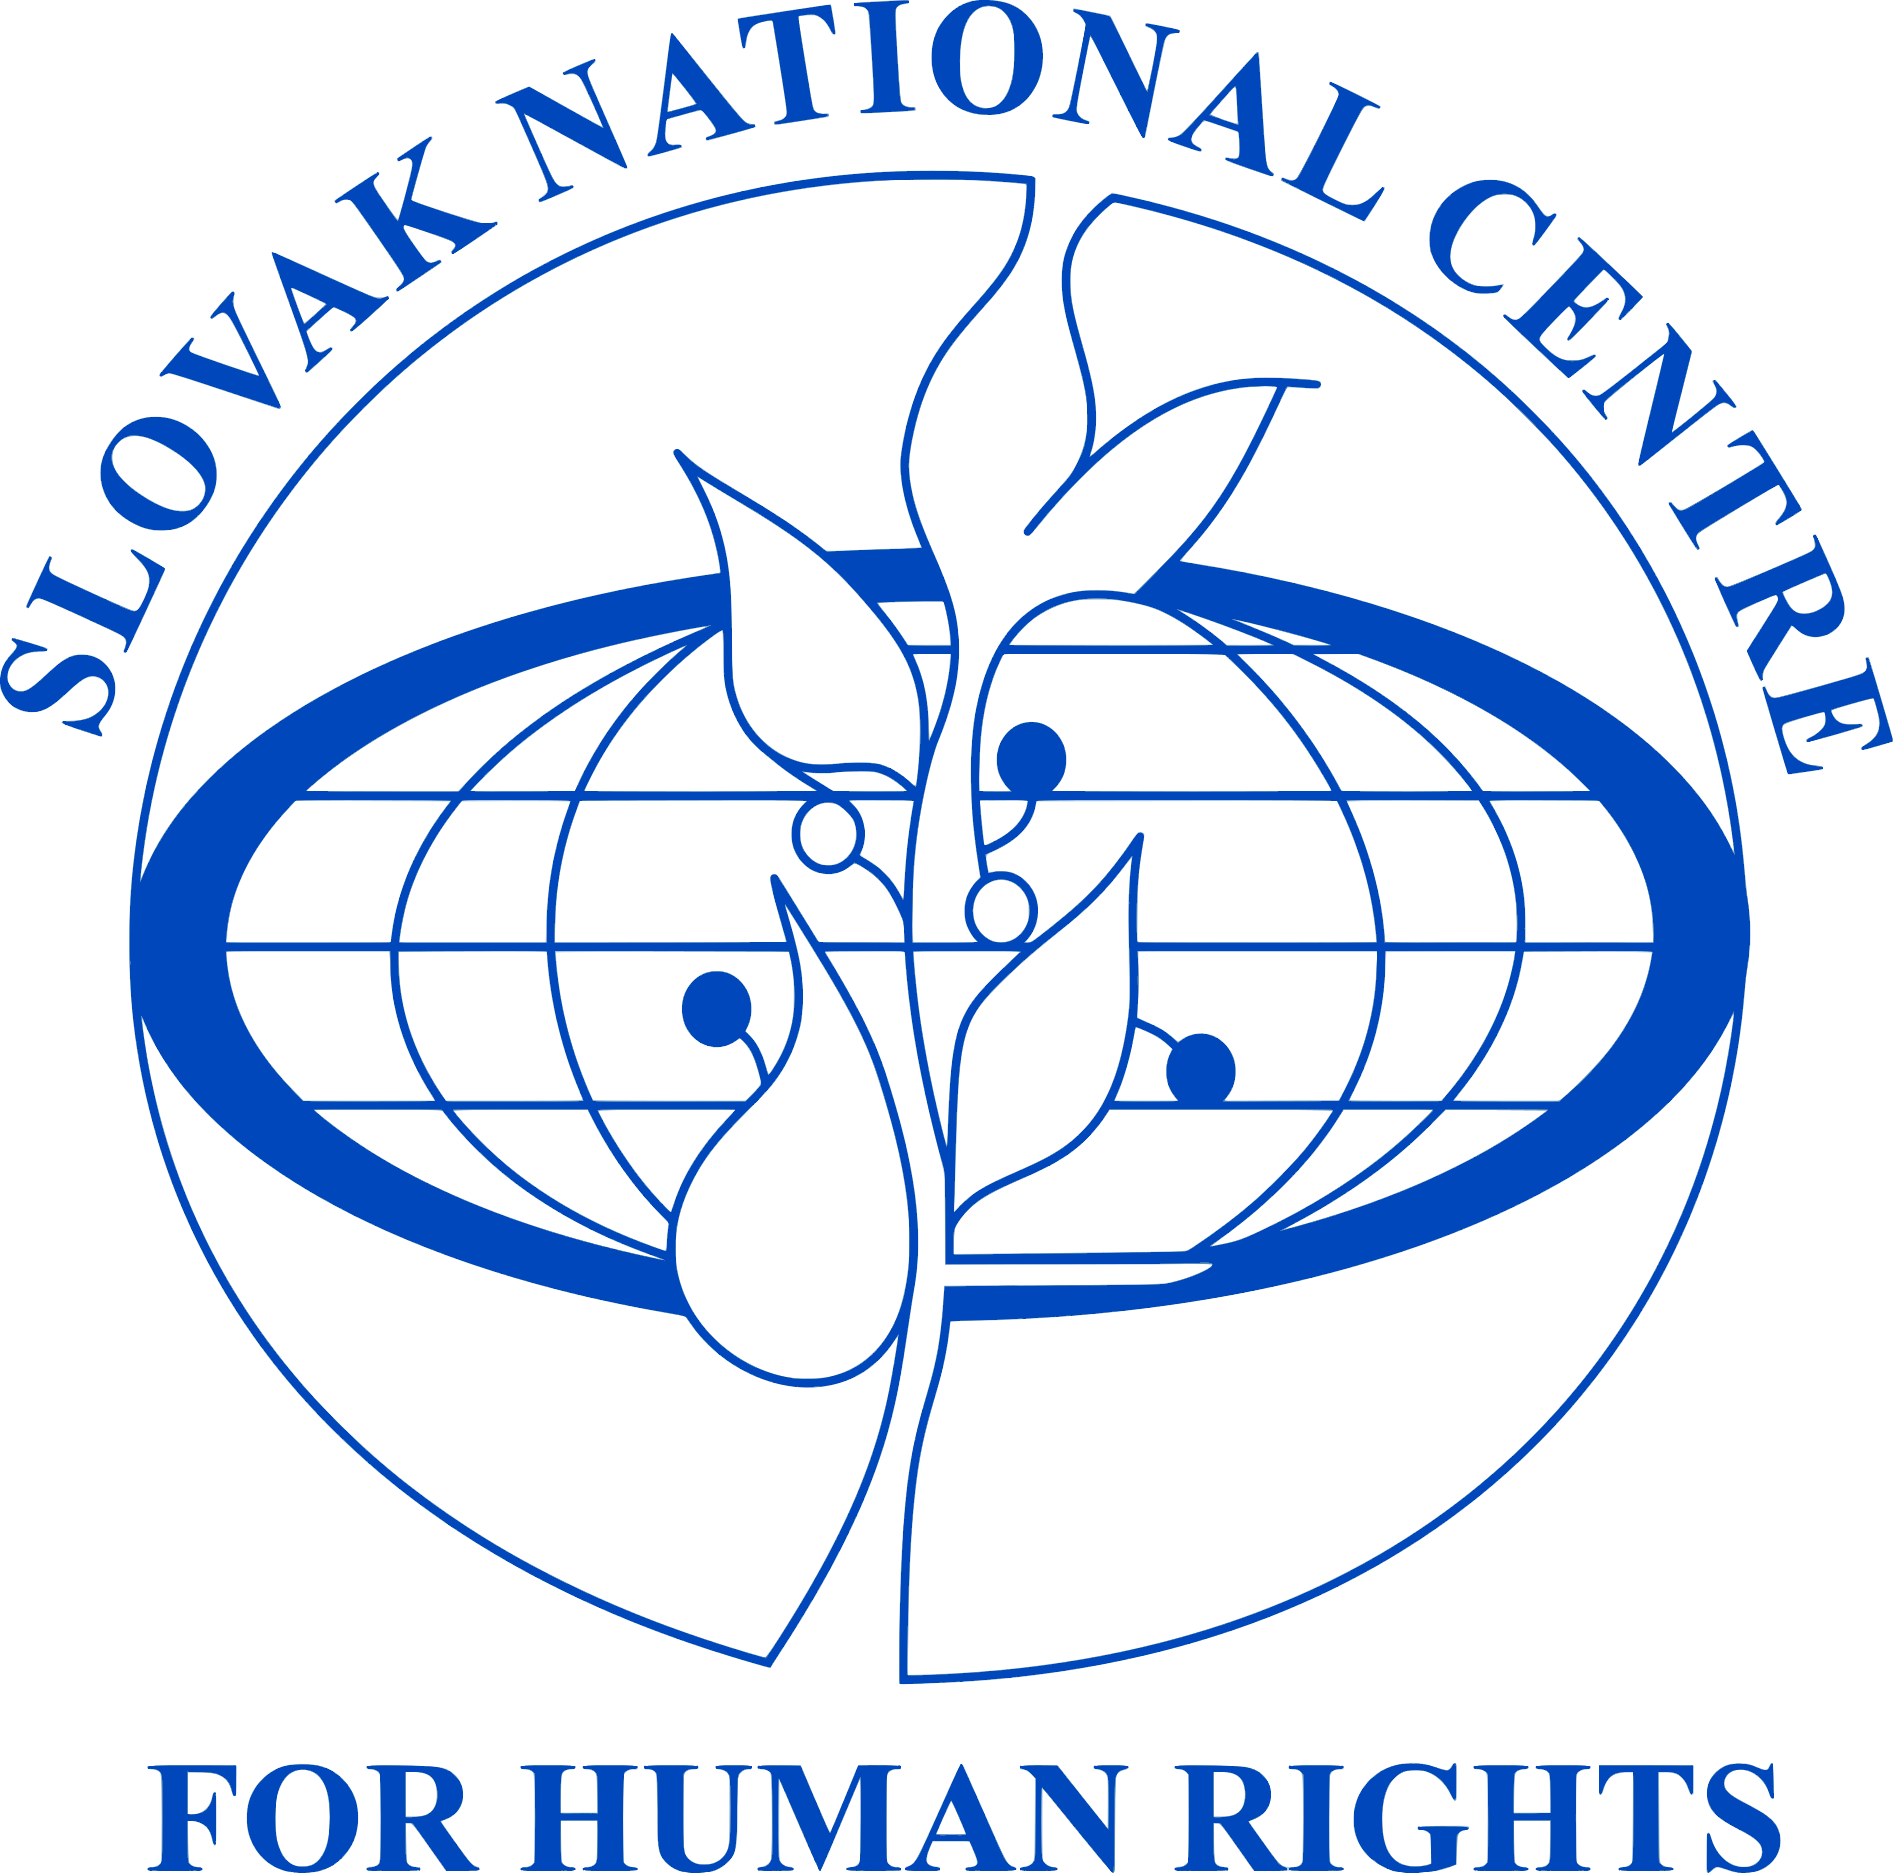 SLOVAK NATIONAL CENTRE FOR HUMAN RIGHTS BRATISLAVA 7 OCTOBER